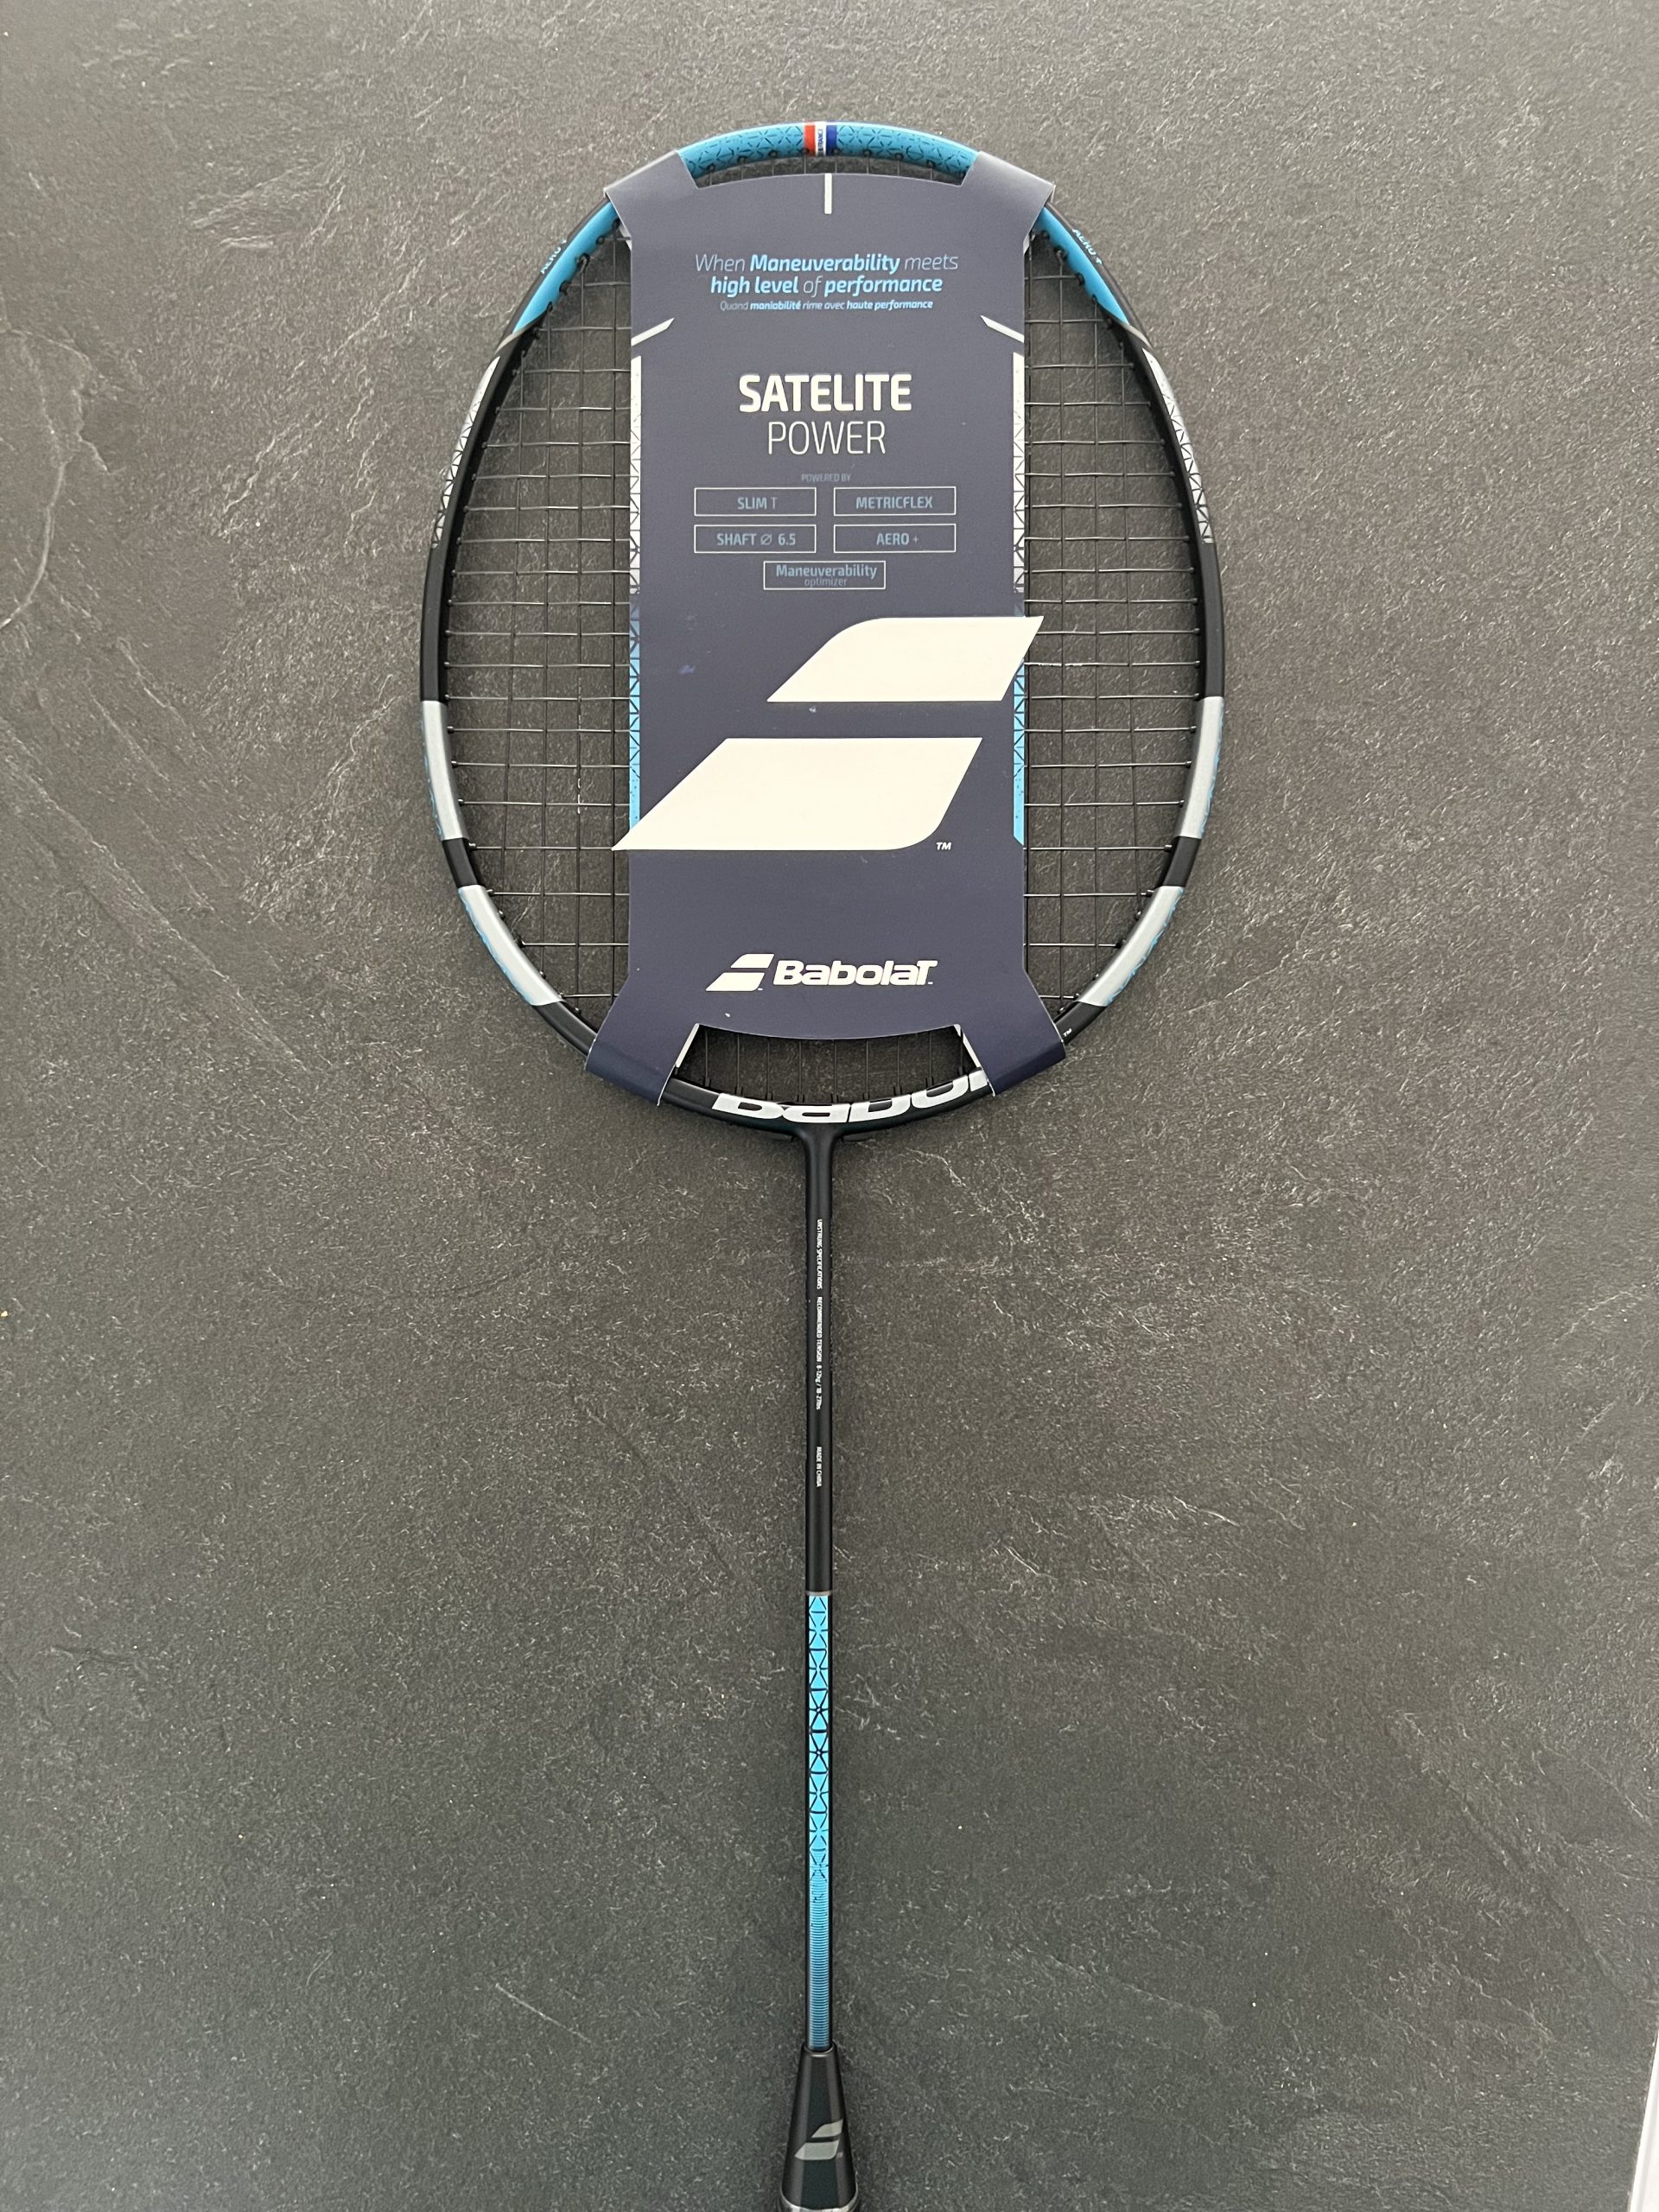 Babolat Satelite Power - Badmintonschläger Test